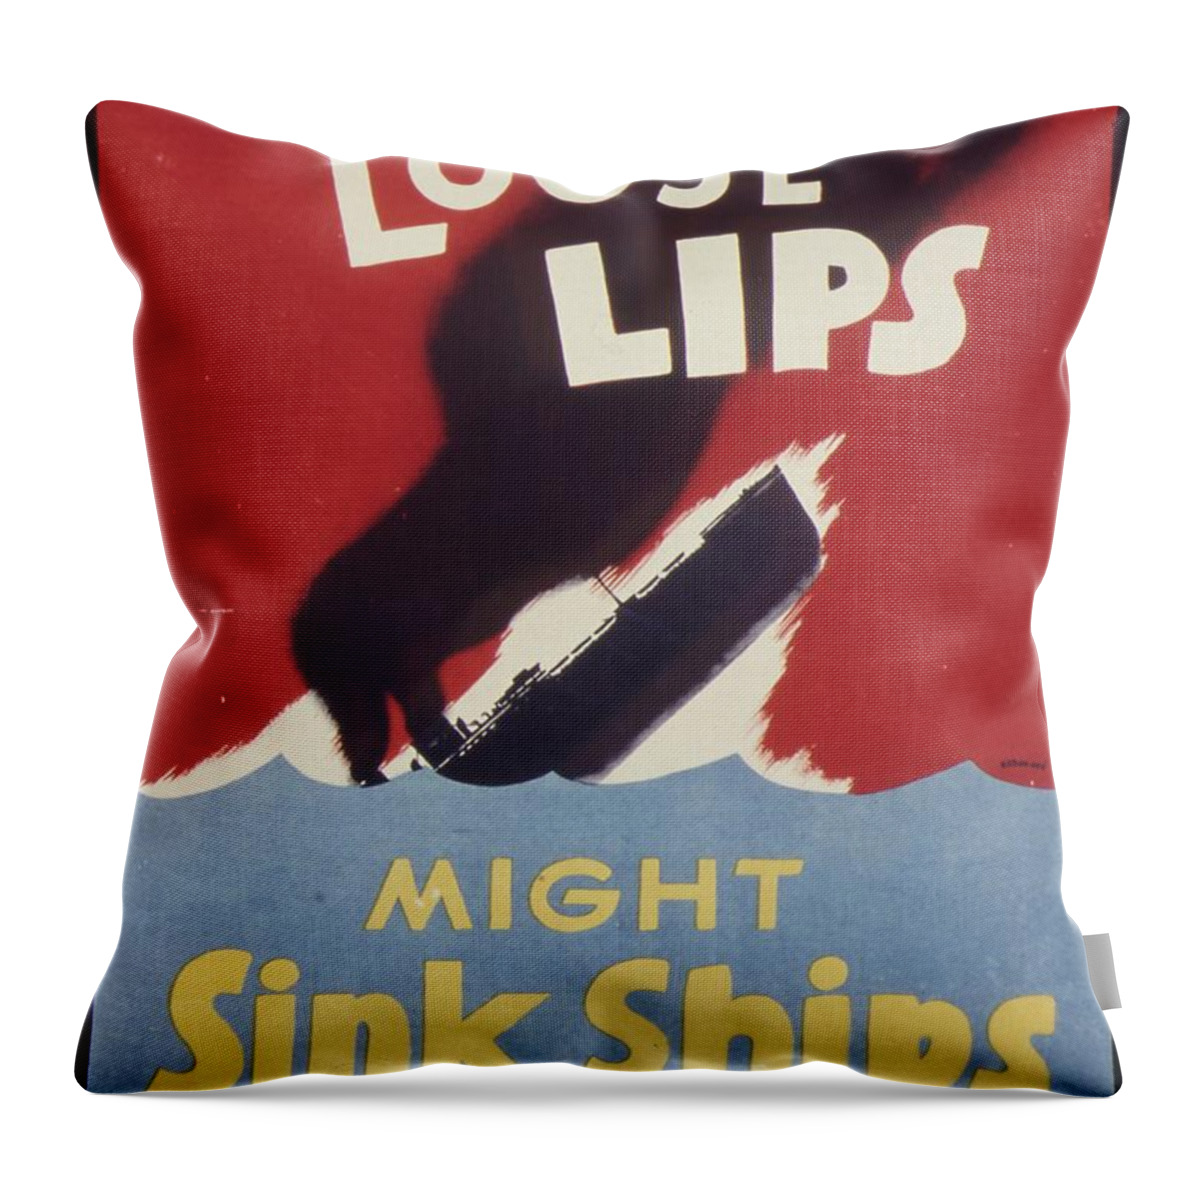 Loose Lips Sink Ships _nara Throw Pillow featuring the painting Loose Lips Sink Ships by MotionAge Designs